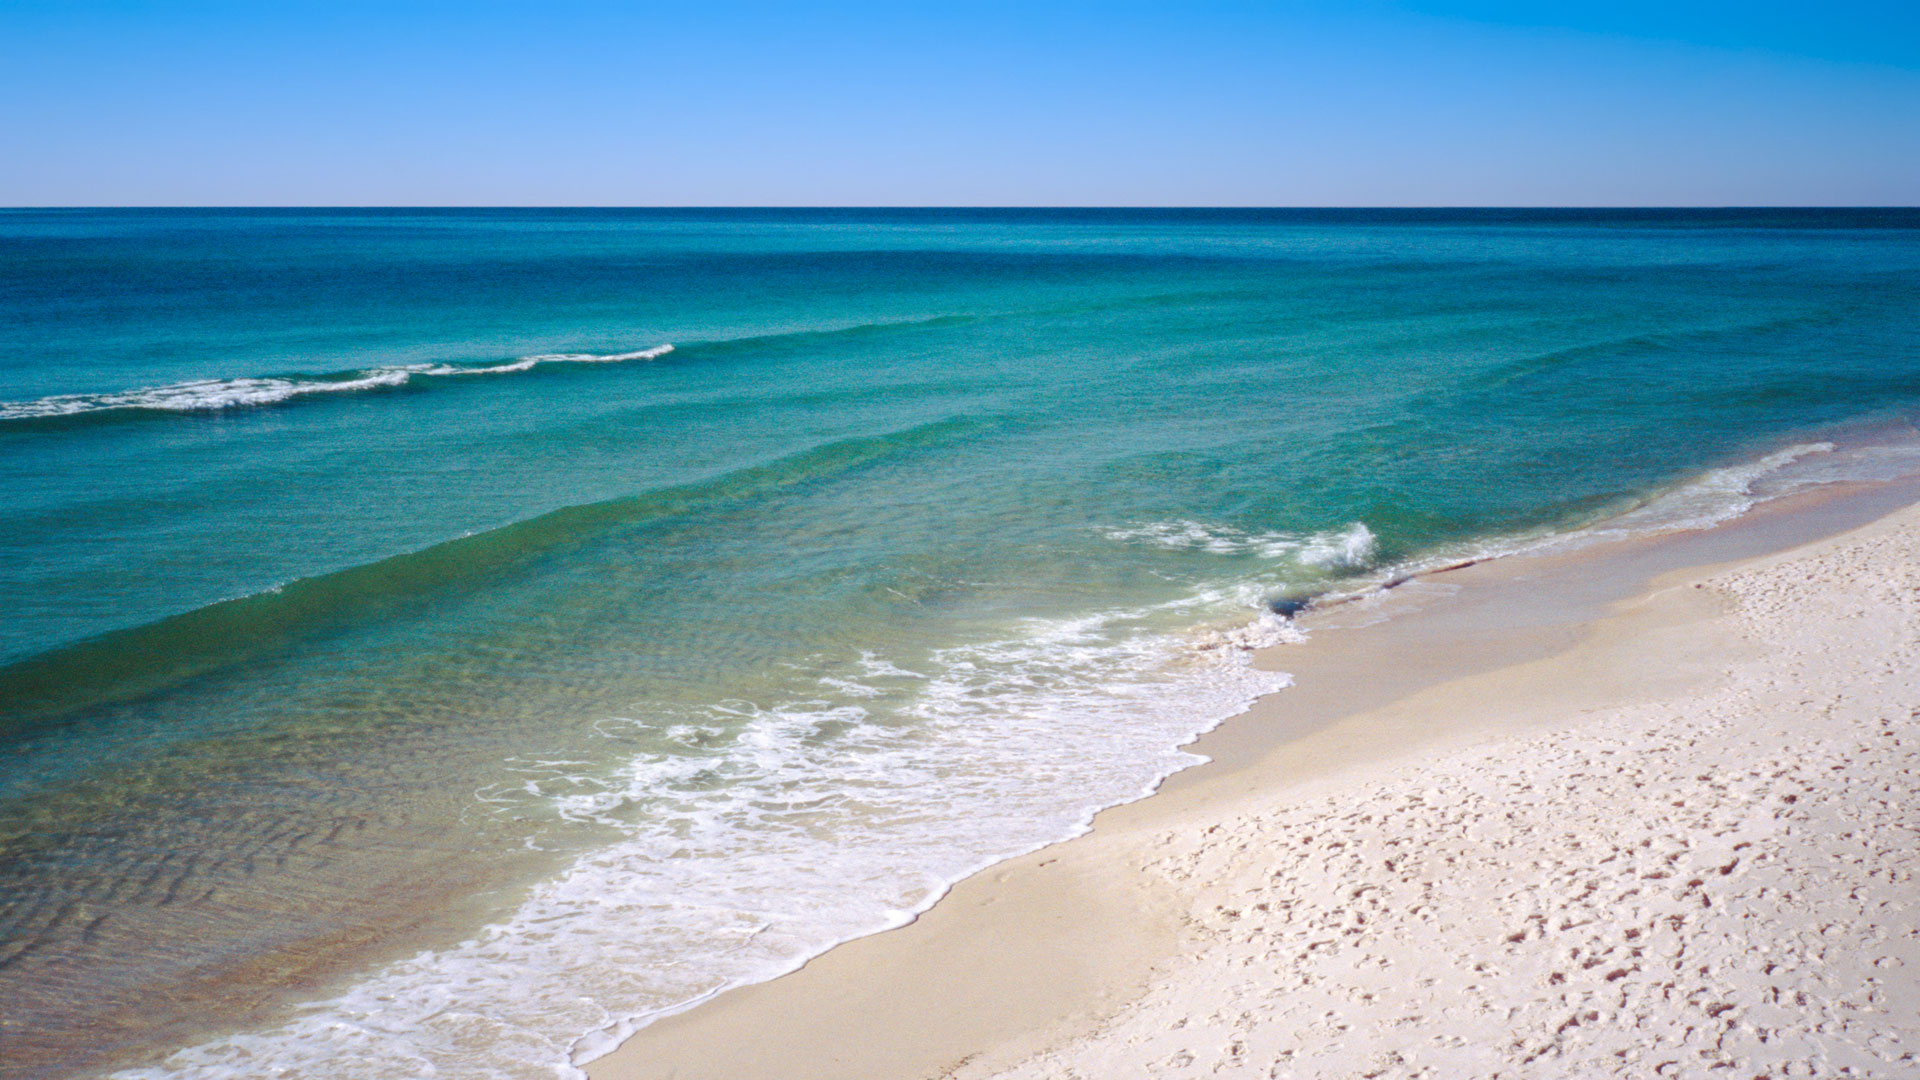 City Beach Panama Beaches Florida Pictures Wallpaper Image